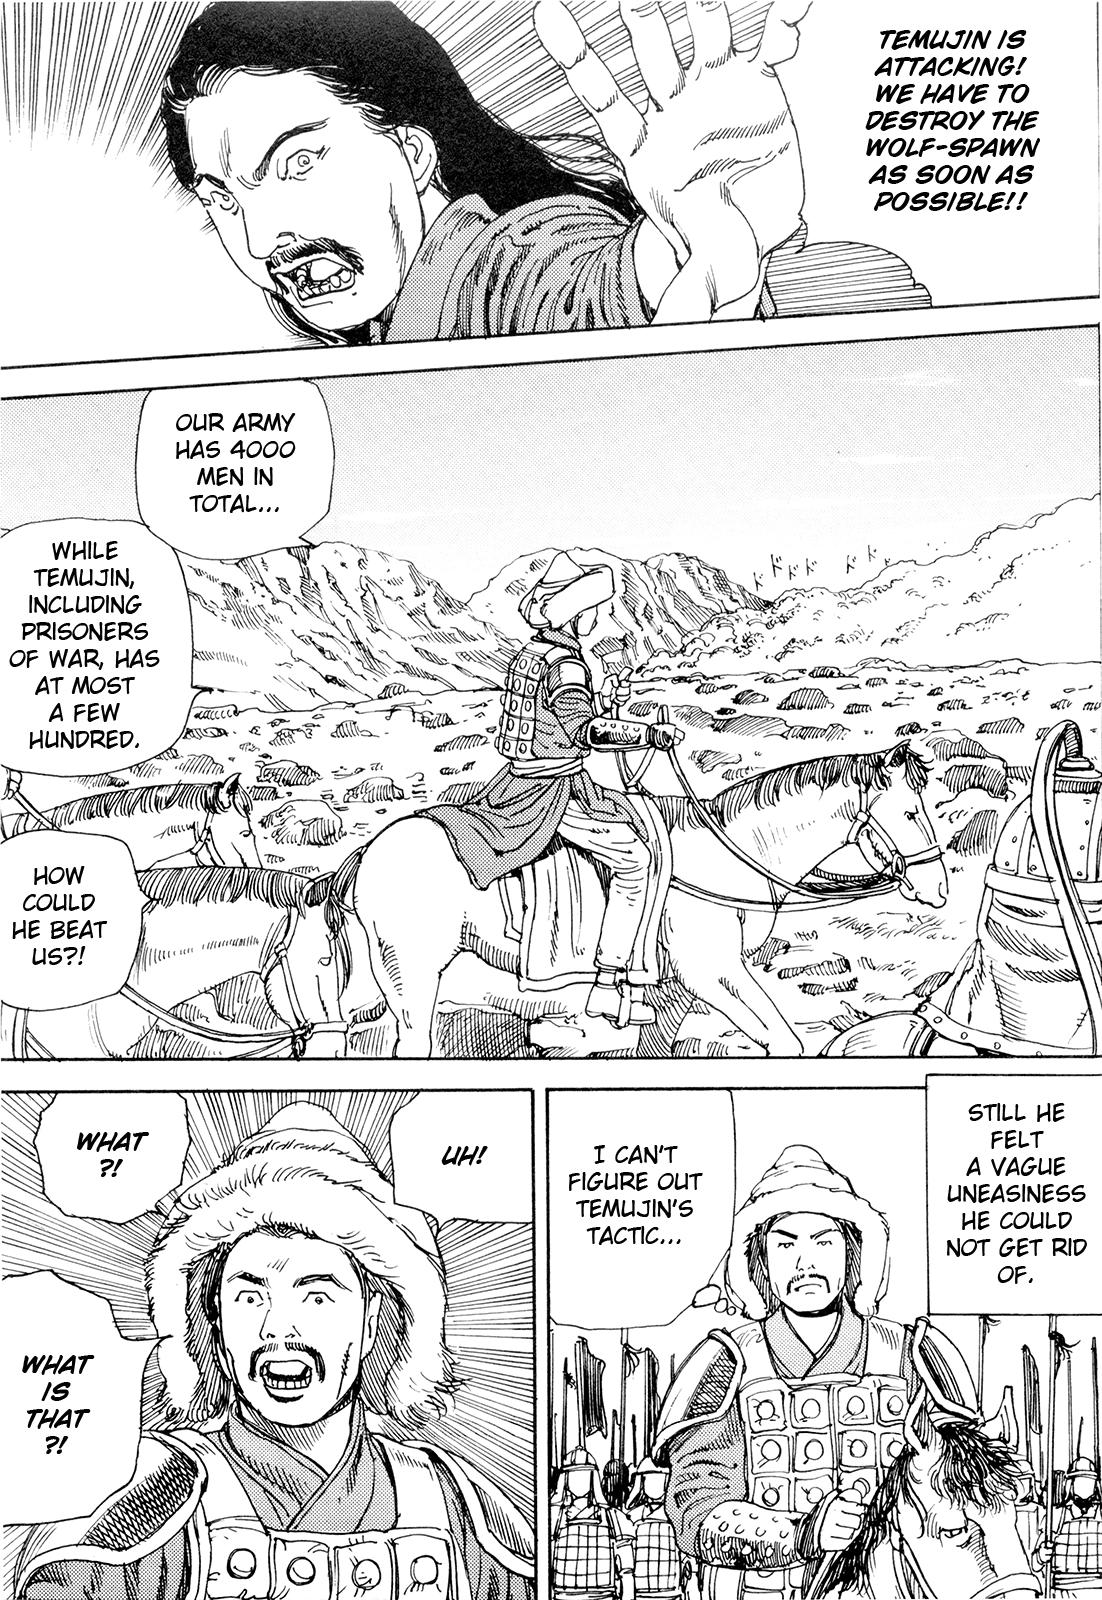 Chou Douryoku Mouko Daishuurai - The Ultra Power Mongol Invasion | Super Powered Mongolia Invasion 8